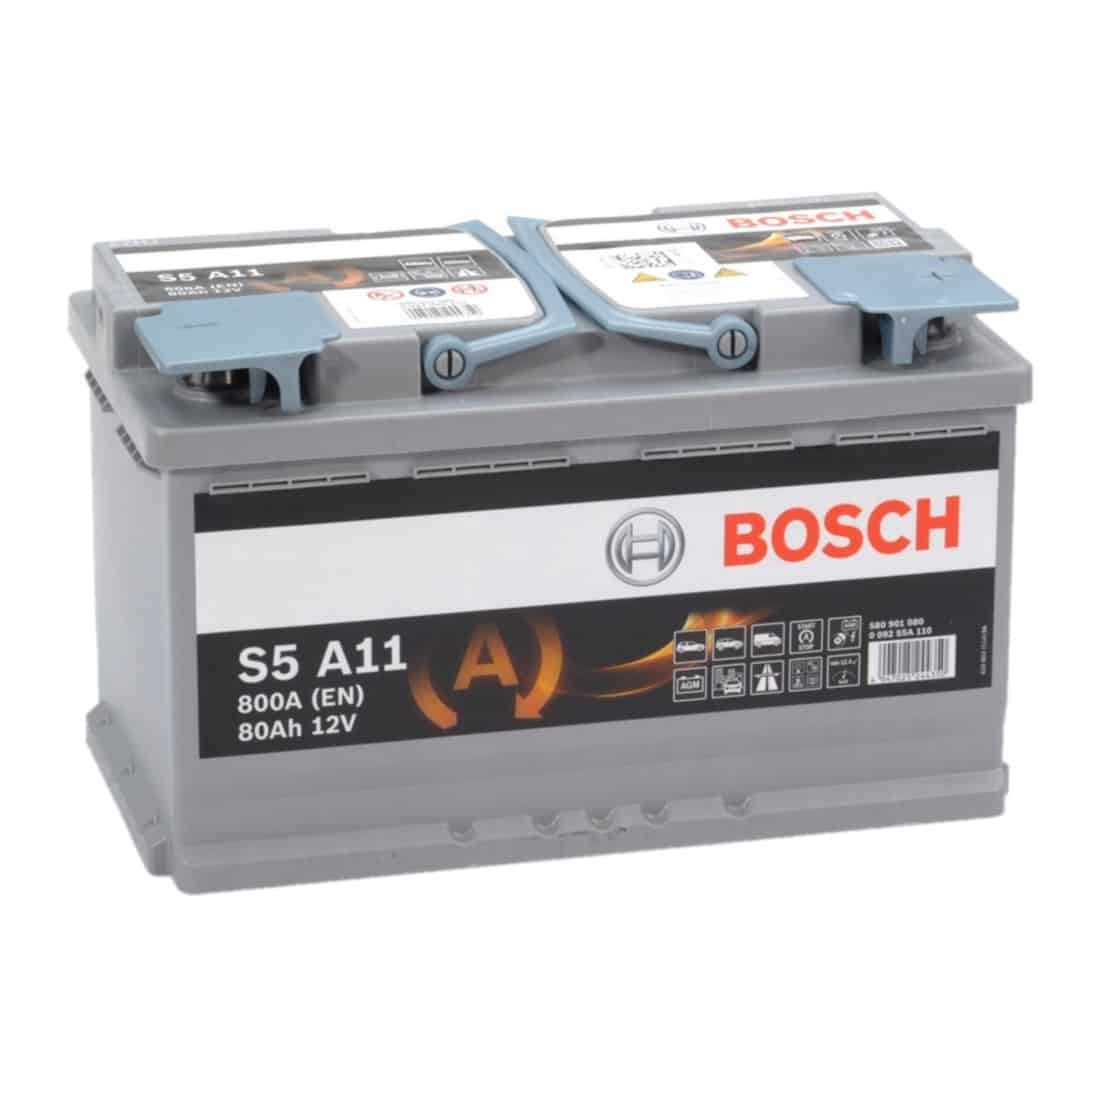 Bosch S5A11 - 80Ah accu, 800A, 12V (0 092 S5A 110) - Accudeal